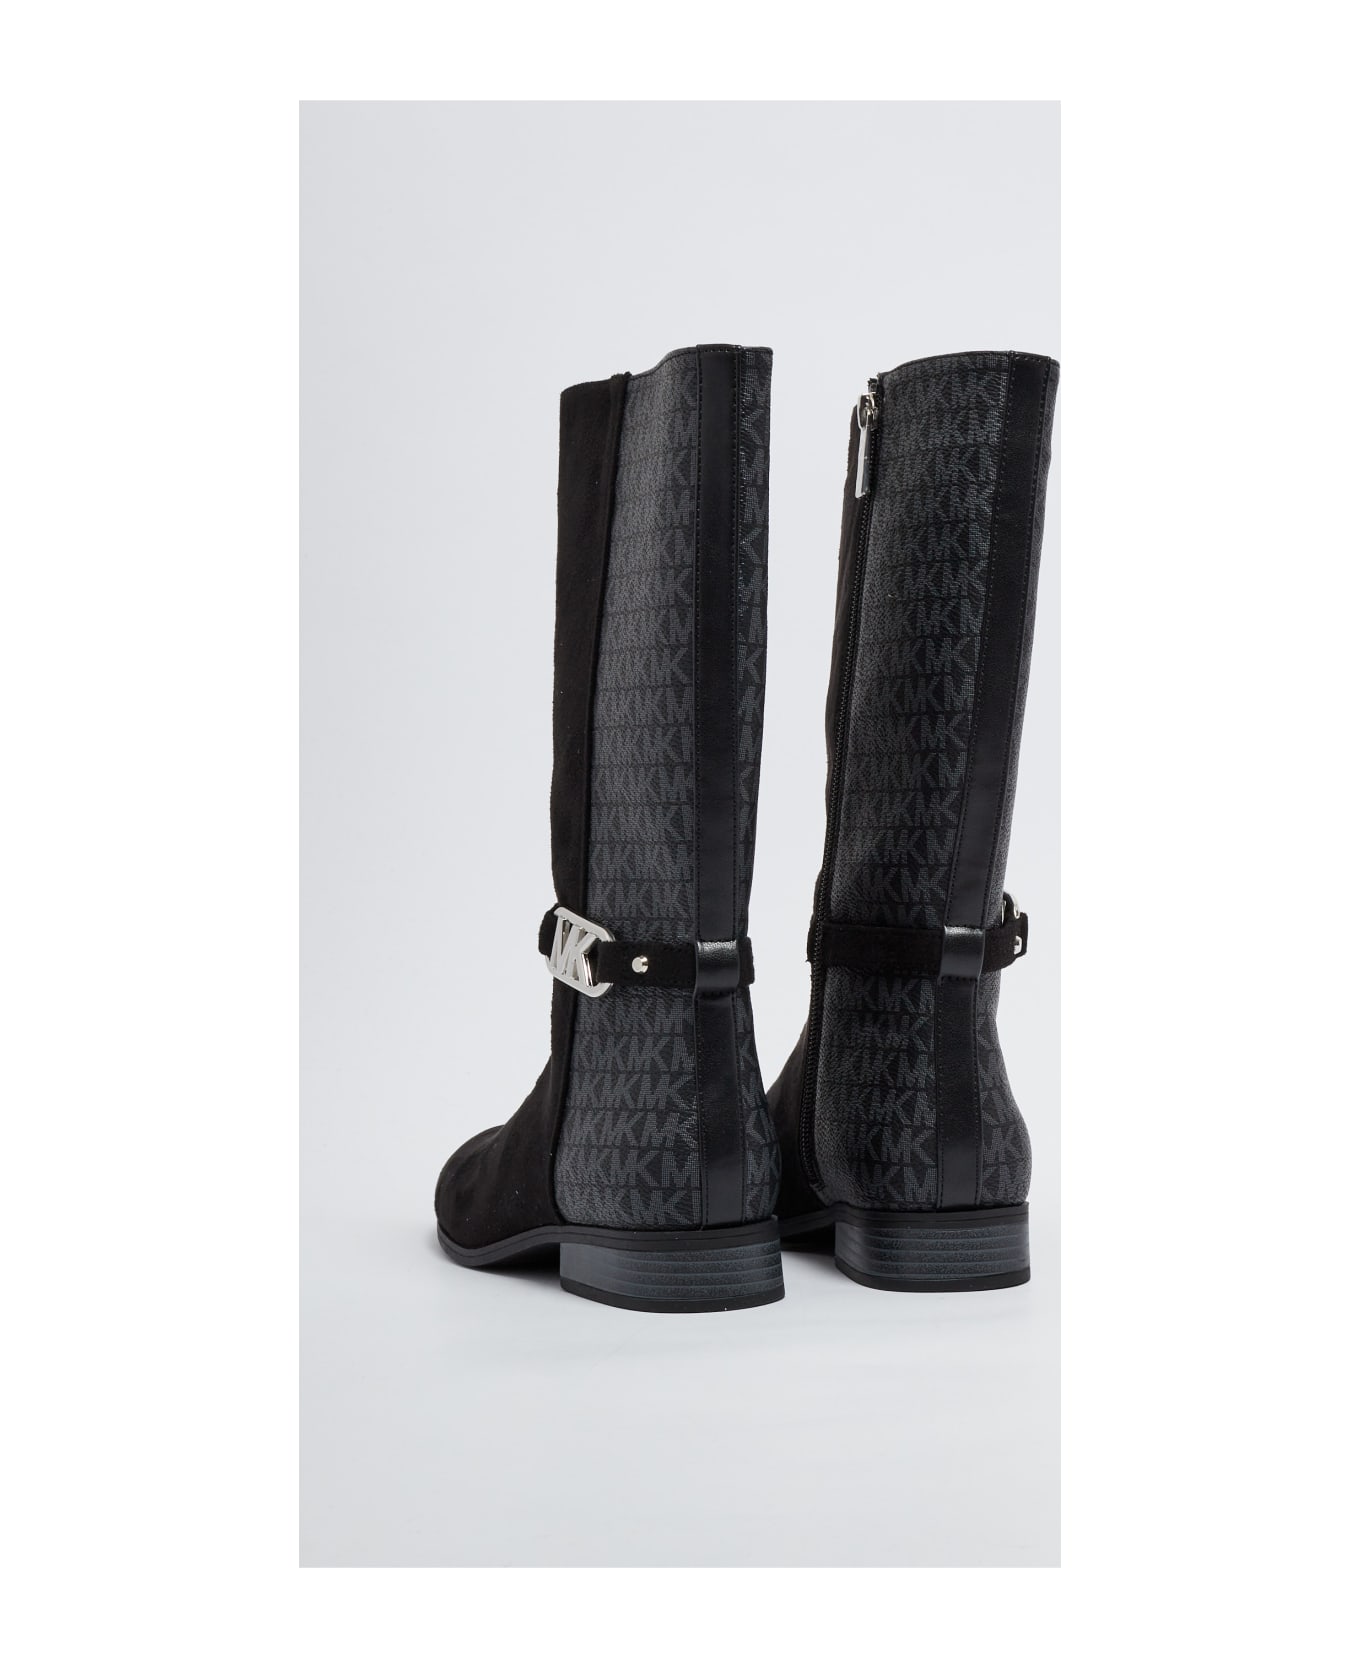 Michael Kors Finley Kincaid 2 Boots Boots - NERO